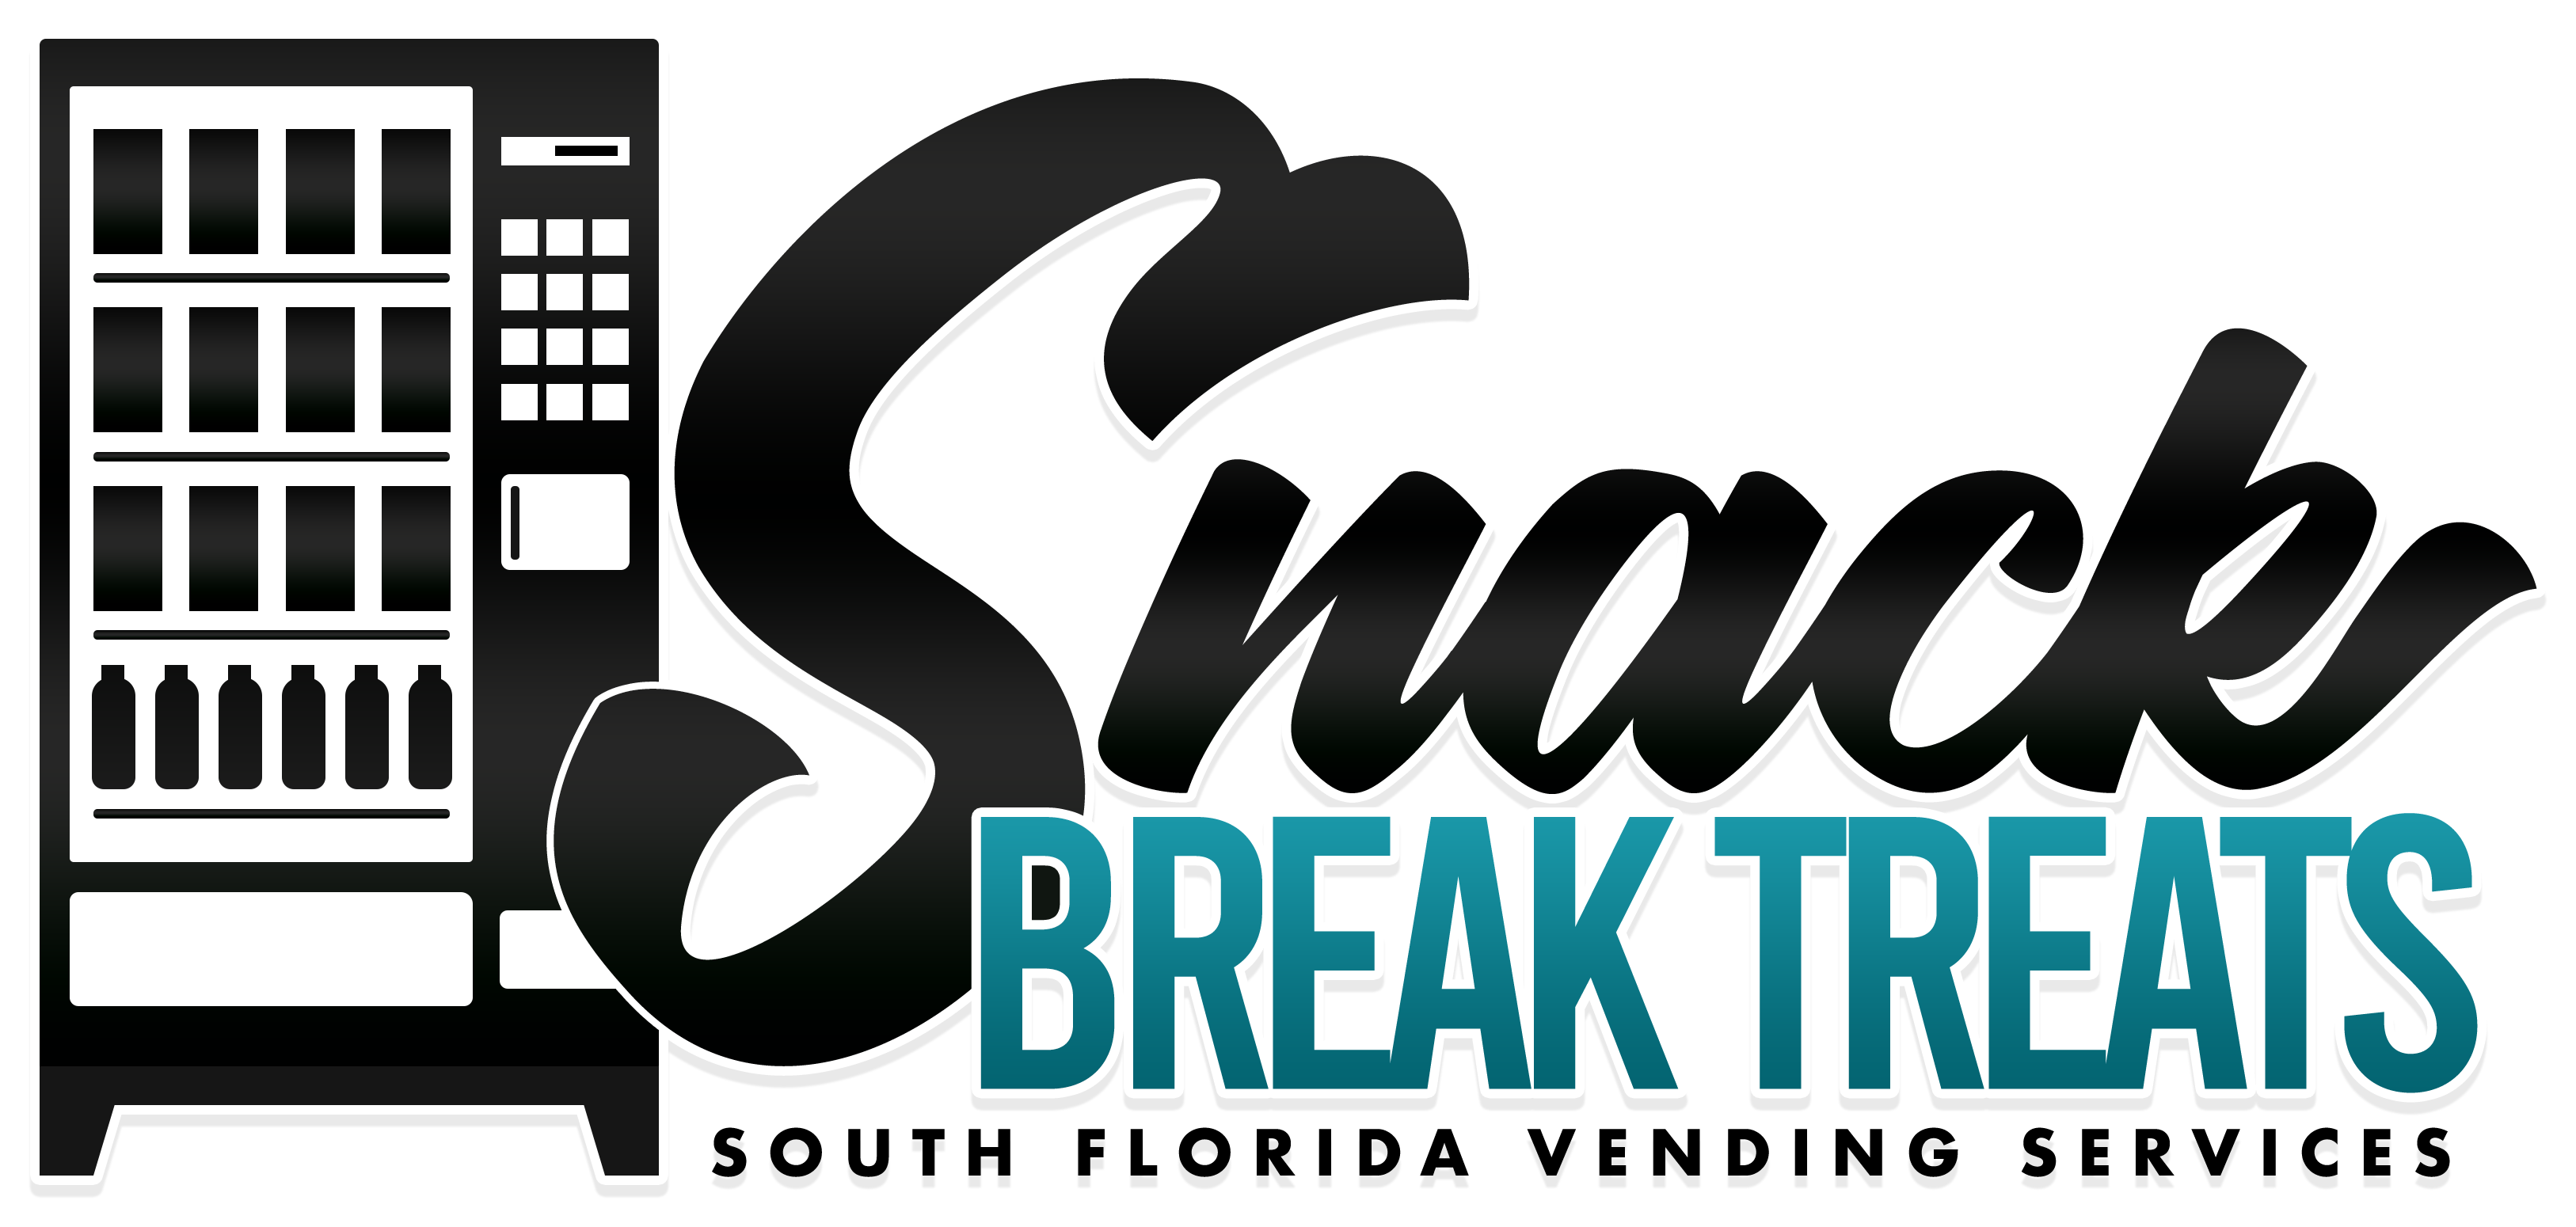 Snack Break Treats Vending Solutions